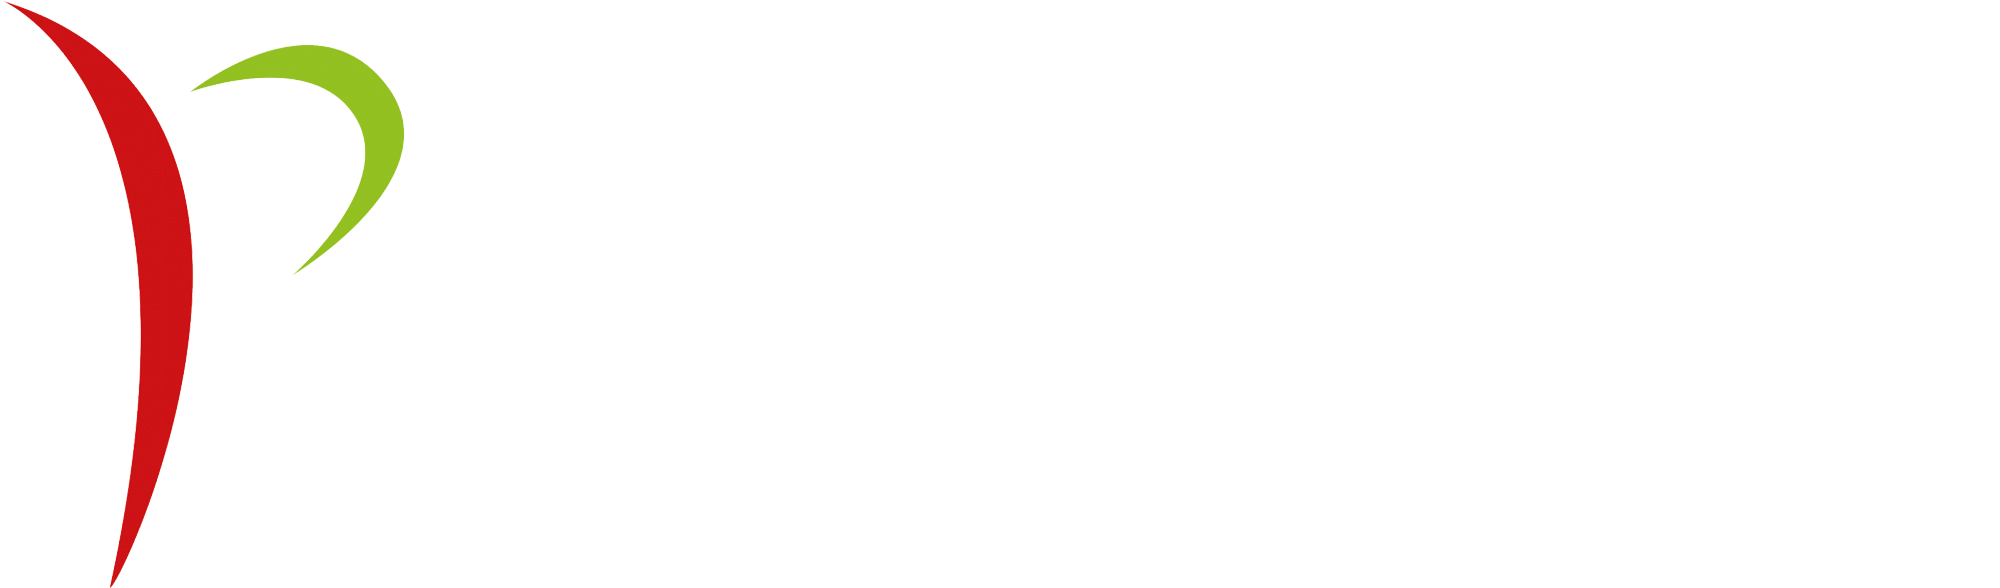 Porticus_logo_white